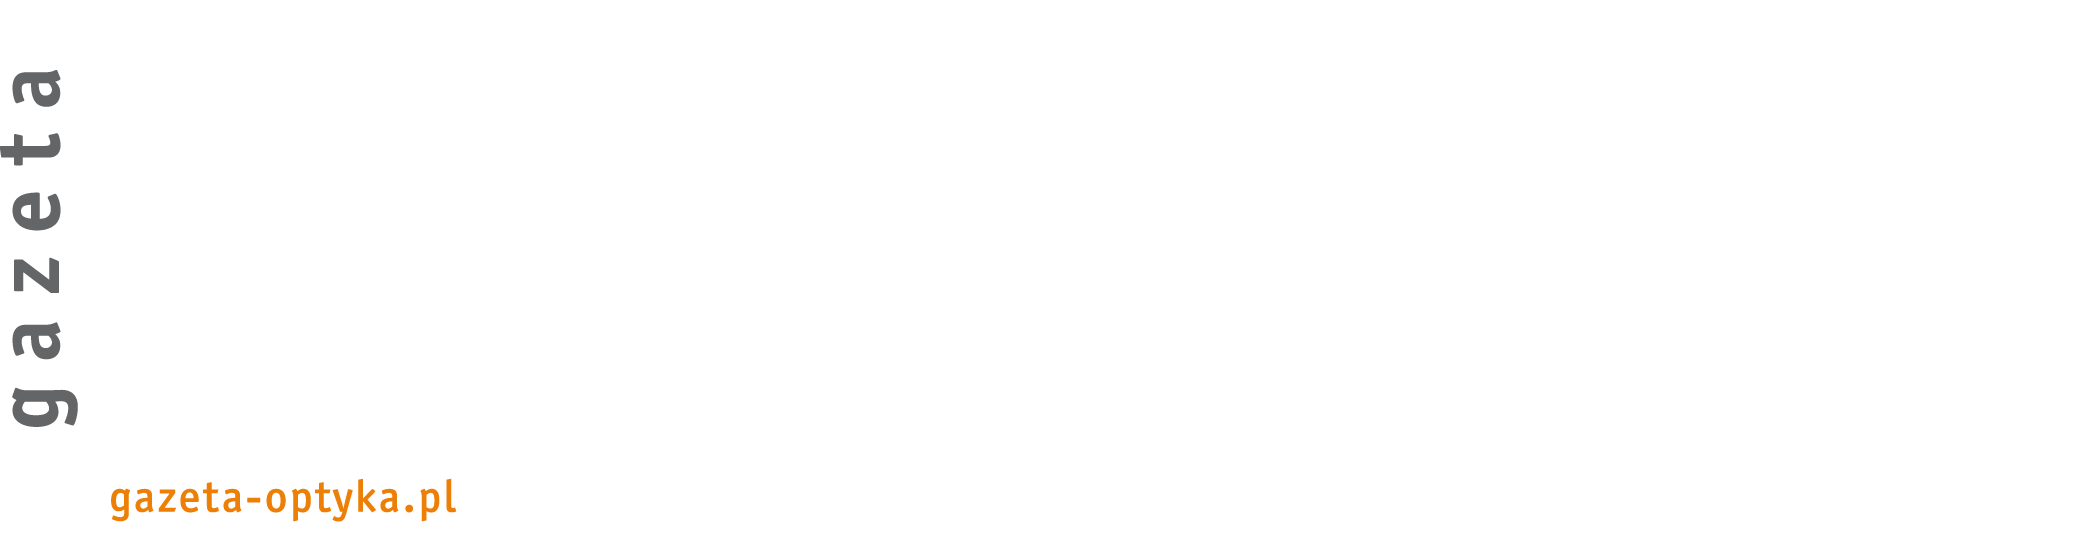 logo_GAZETA_optyka_www_2022_BIALE